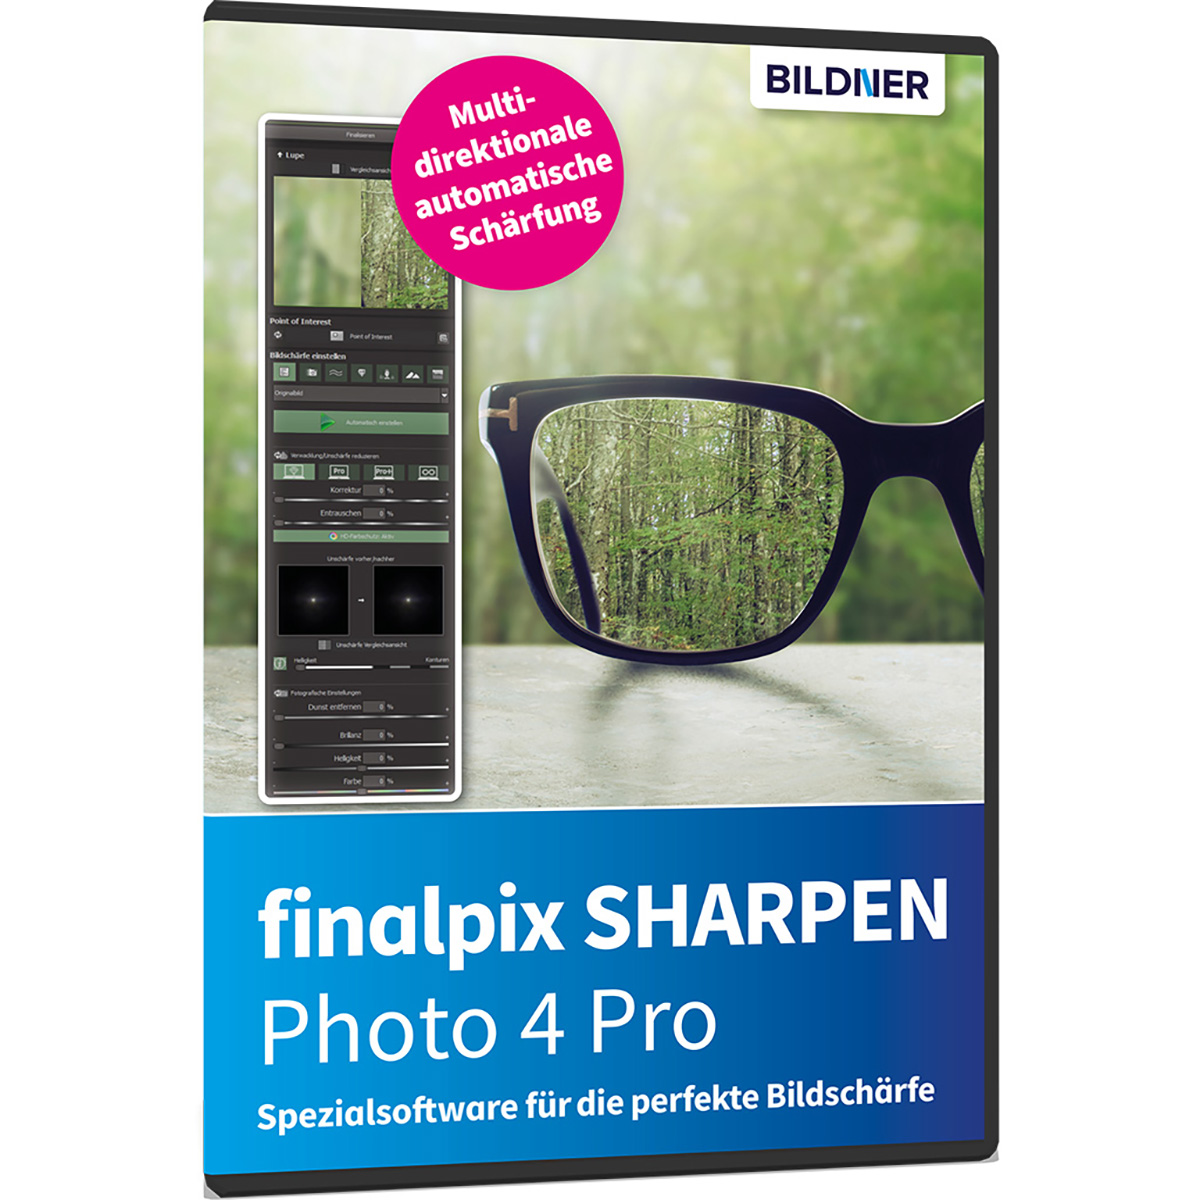 SHARPEN Pro Photo 4 finalpix (Softwarekey)